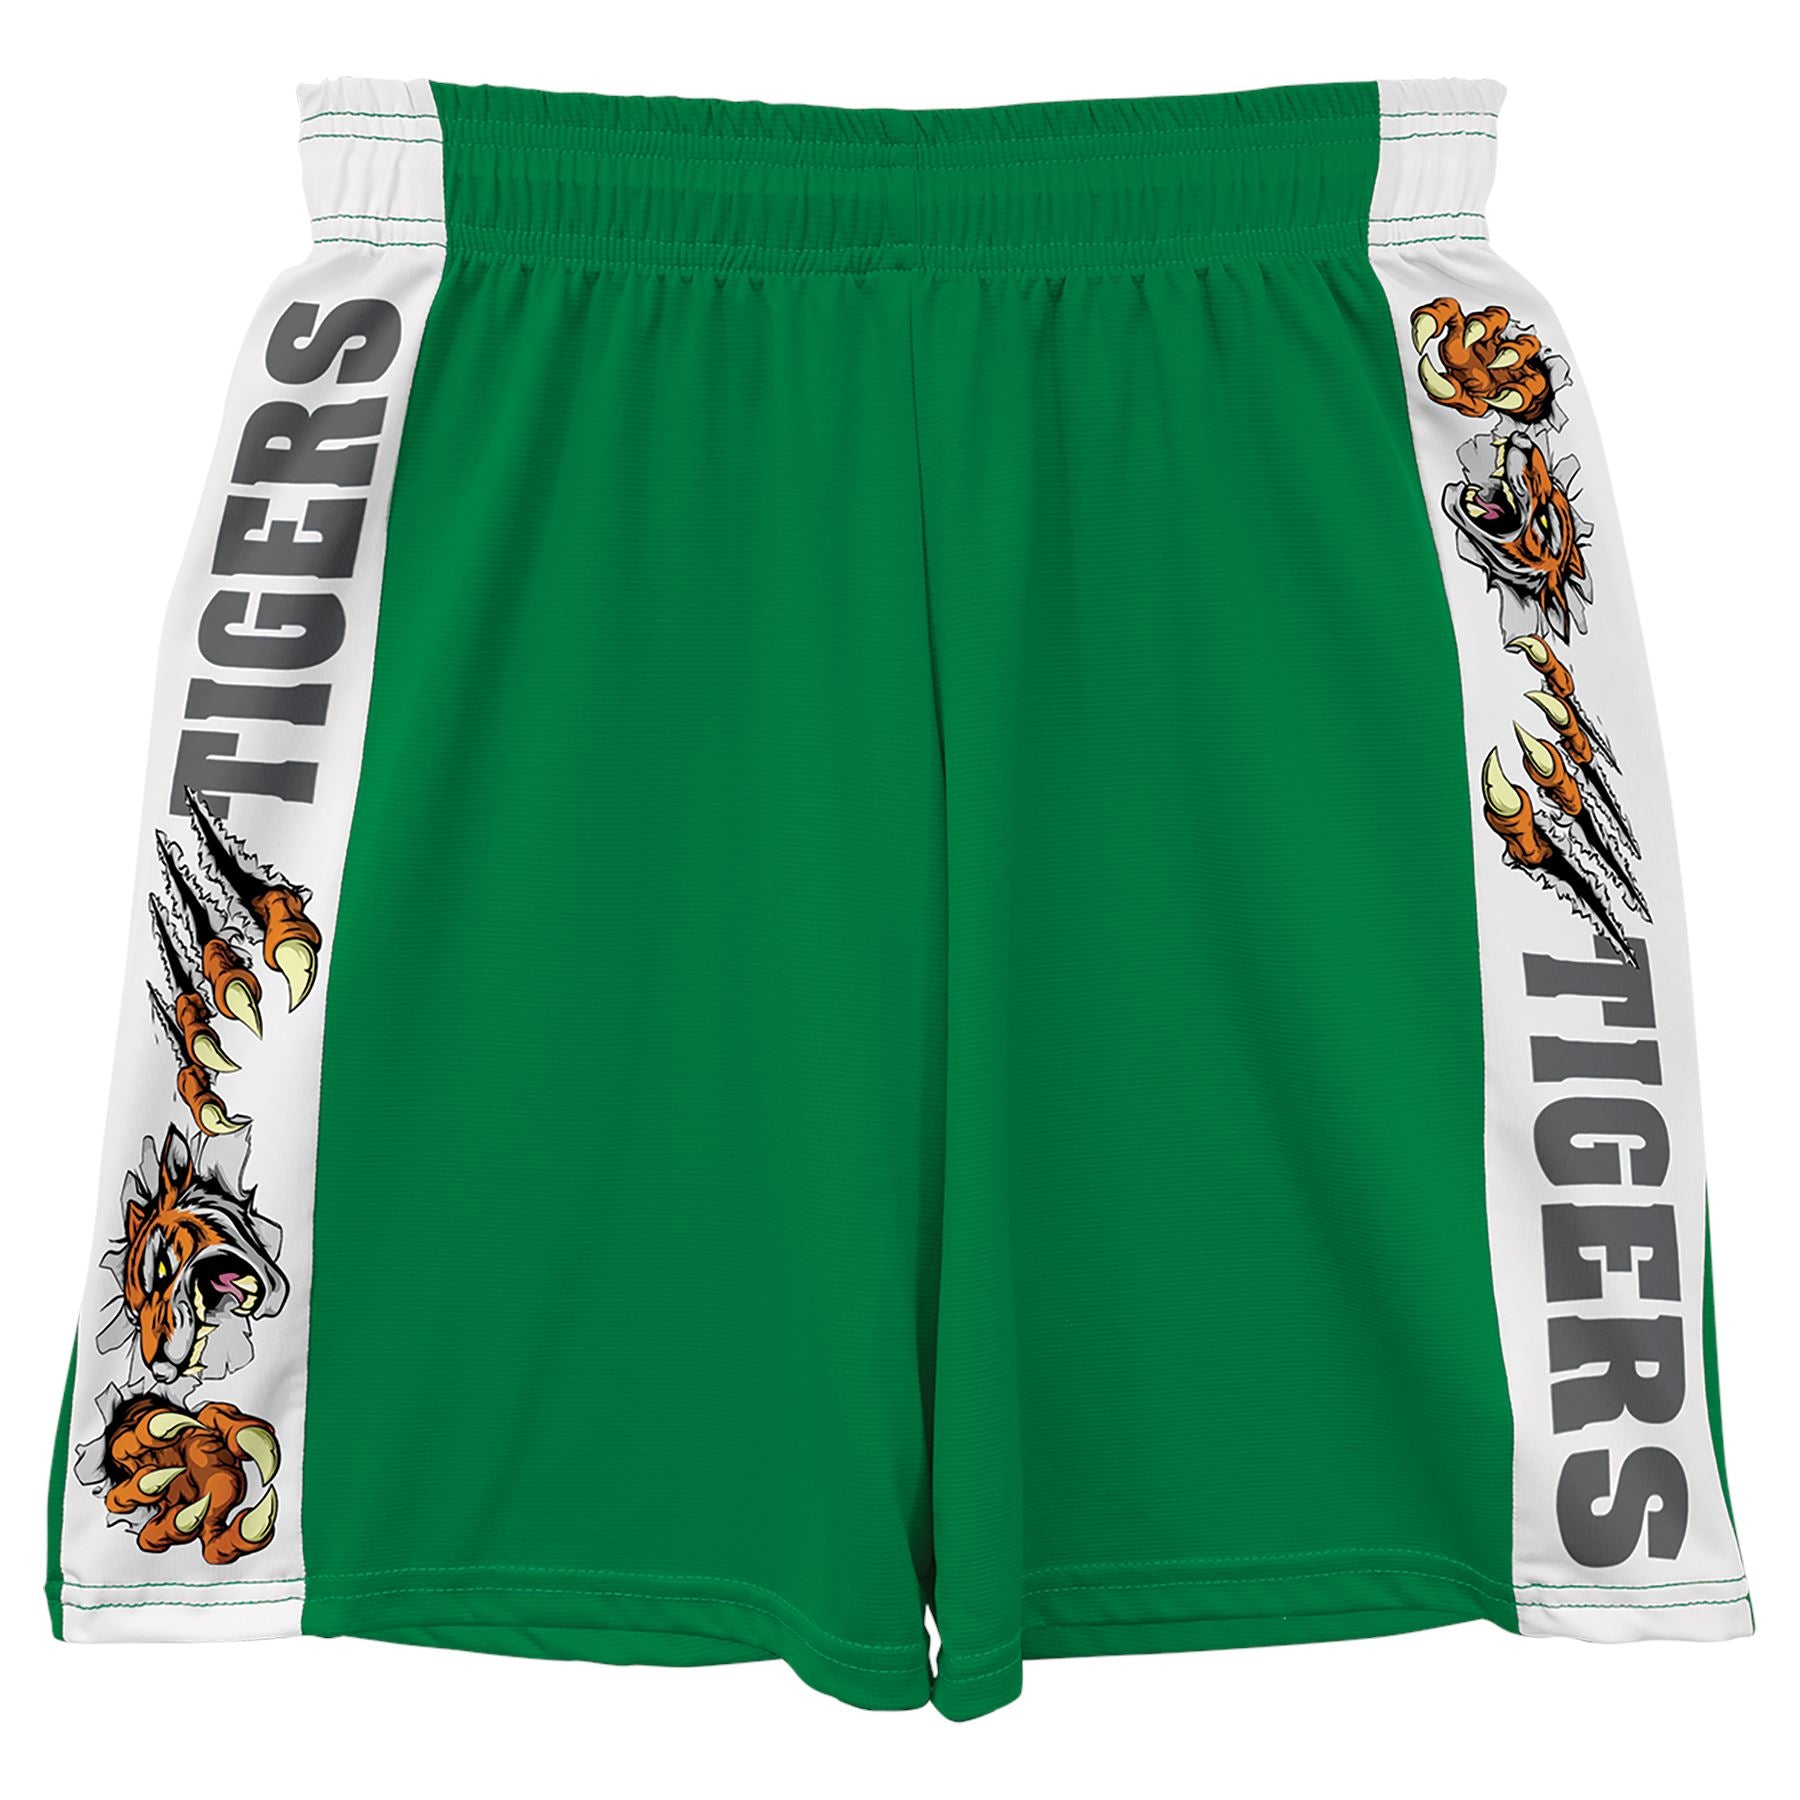 Subli-Tru Shorts, Youth, Full Color Dye Sub Shorts Craftworks NW Kelly Green Small 